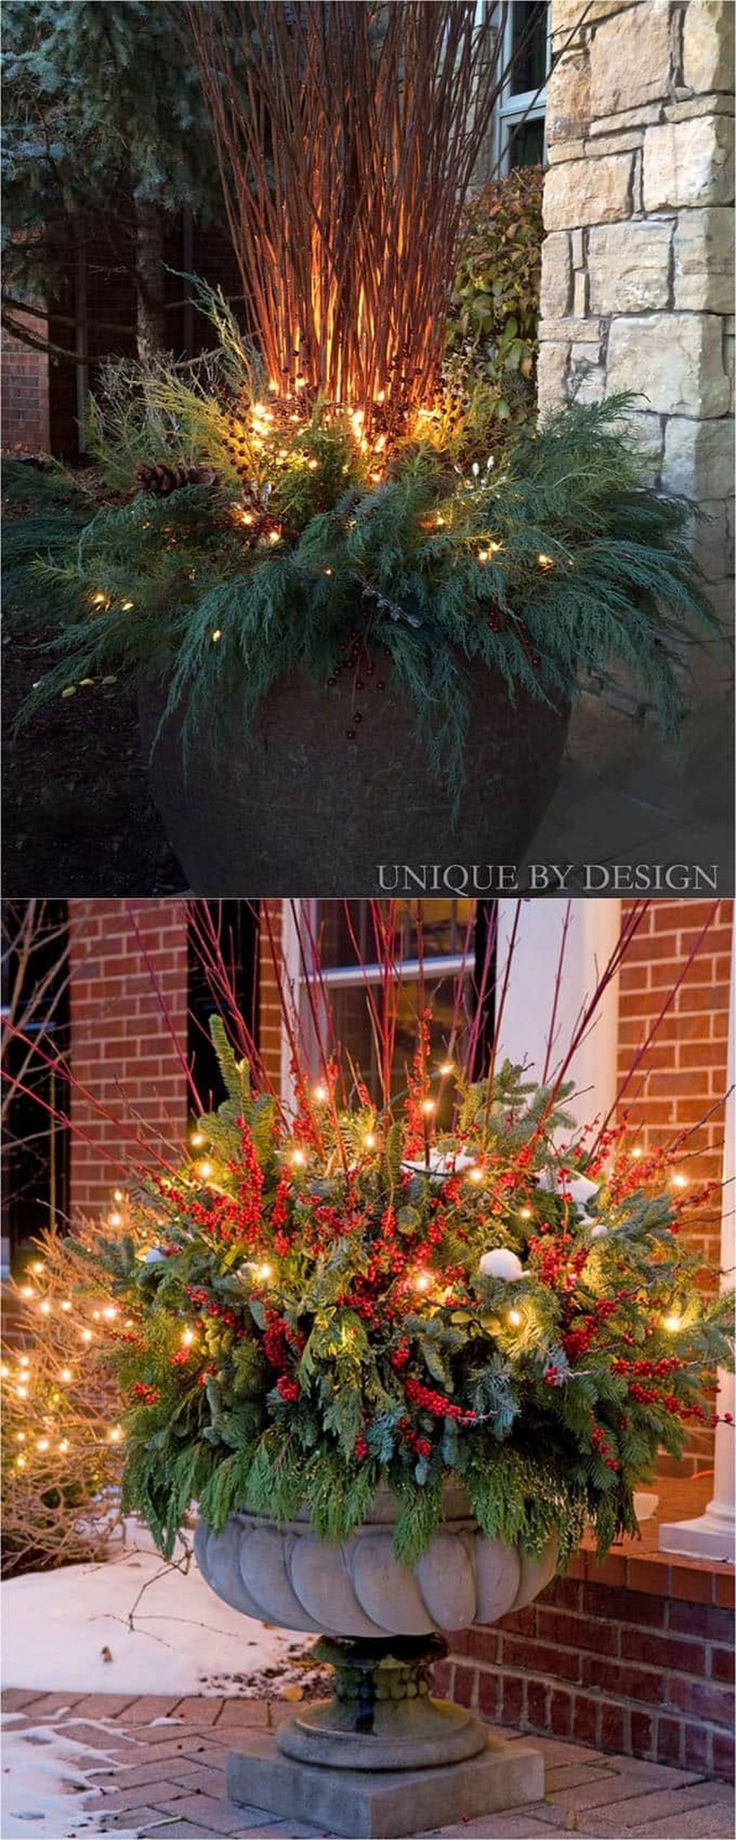 Discount Outdoor Christmas Decor
 Best 25 Cheap christmas decorations ideas on Pinterest